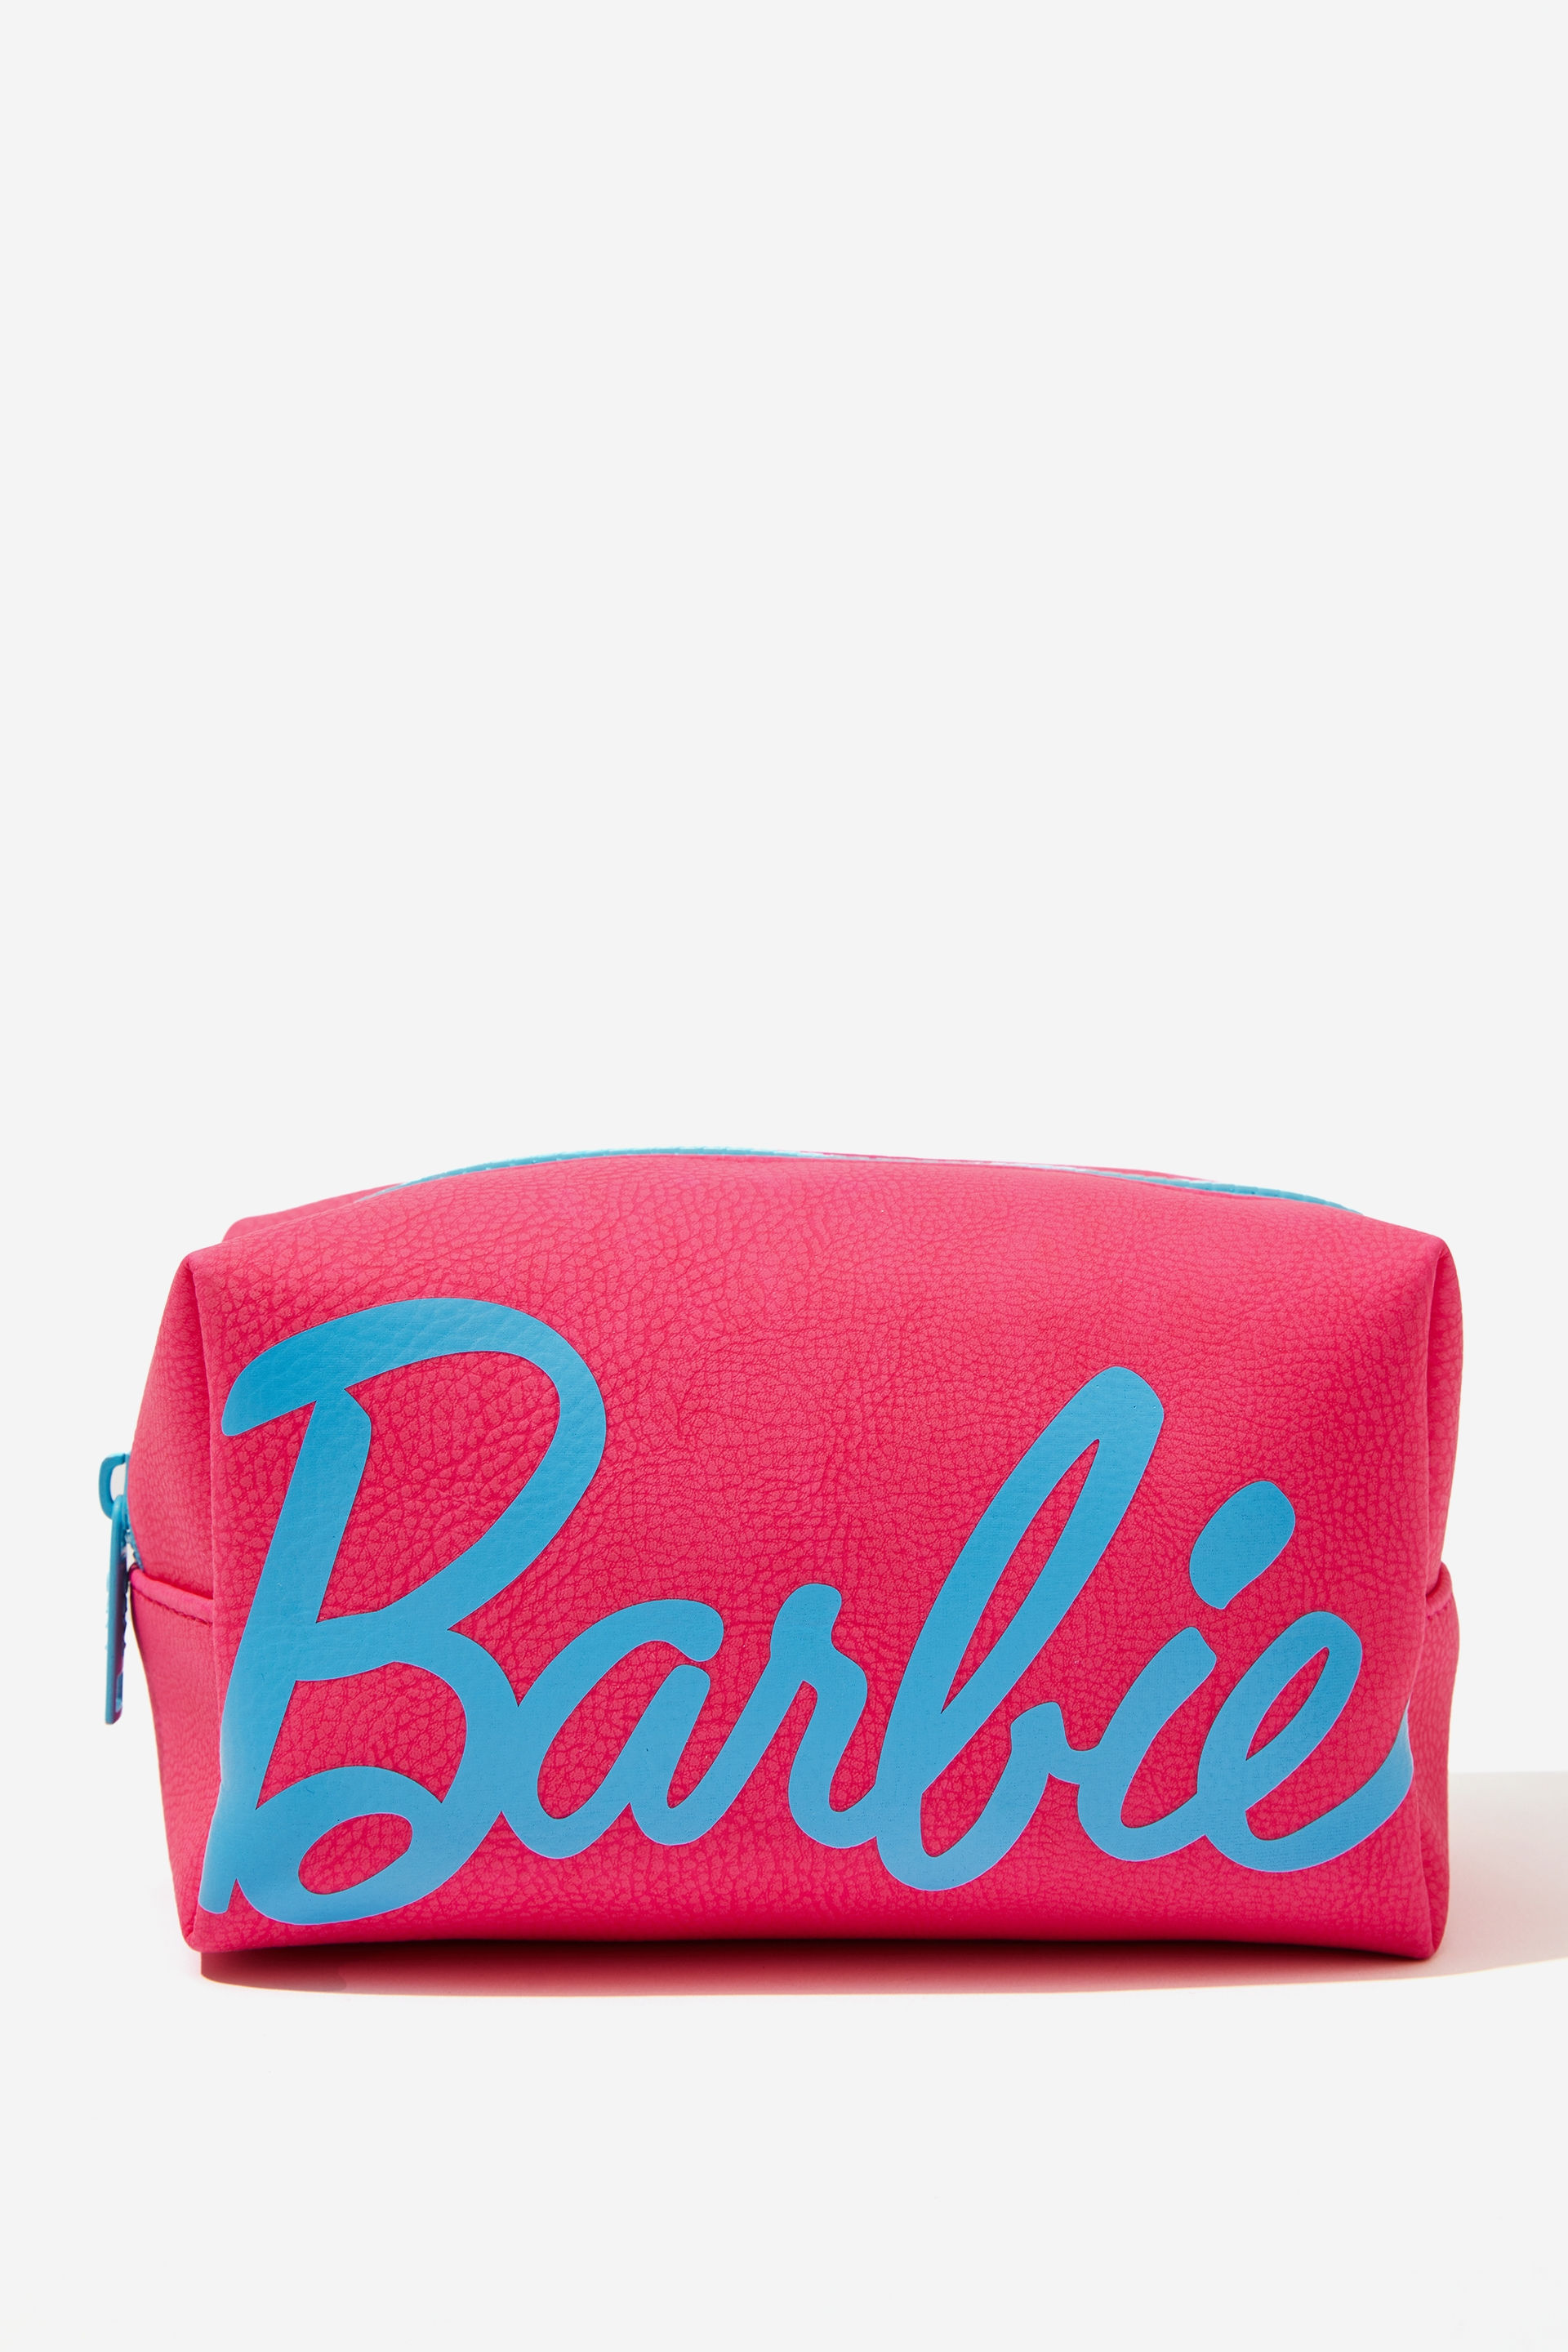 Barbie | Bags | Cakeworthy Barbie Box Purse | Poshmark